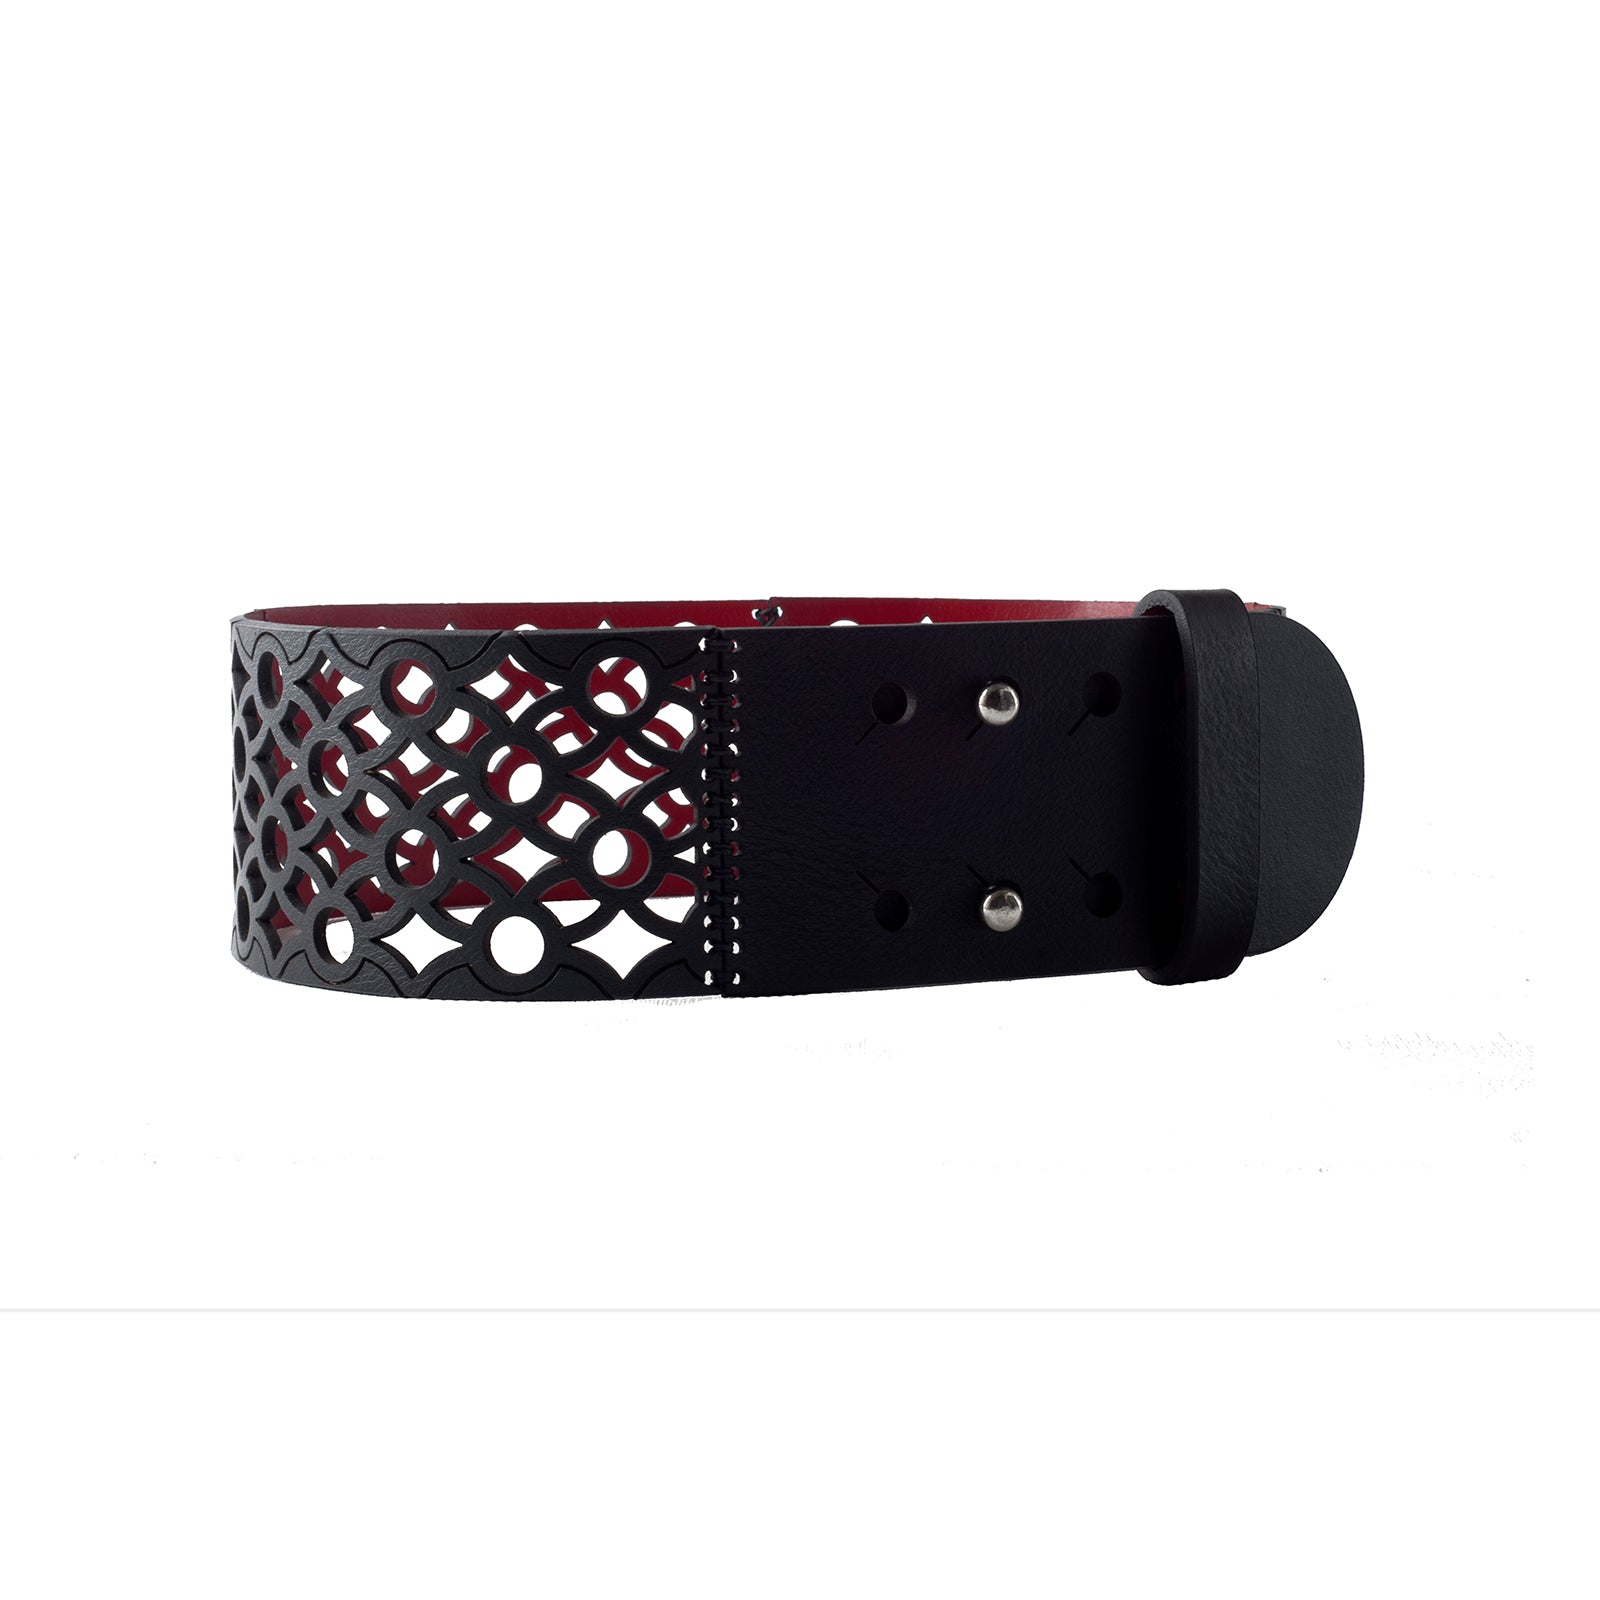 0770 Nave lasered leather belt